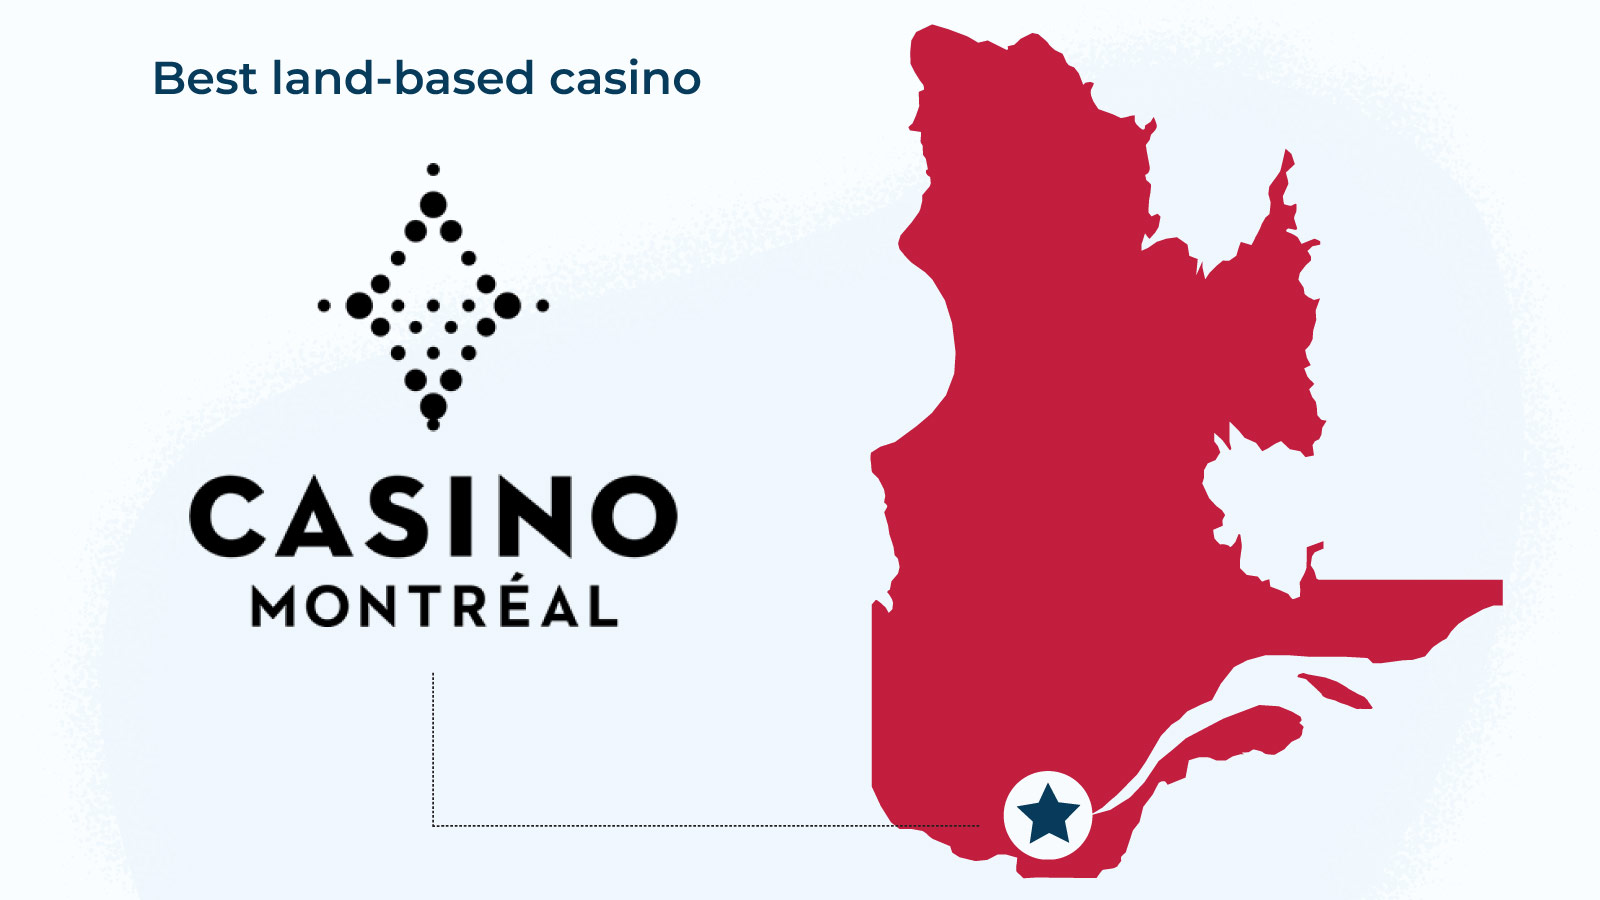 Best land-based casino in Quebec province Casino de Montreal